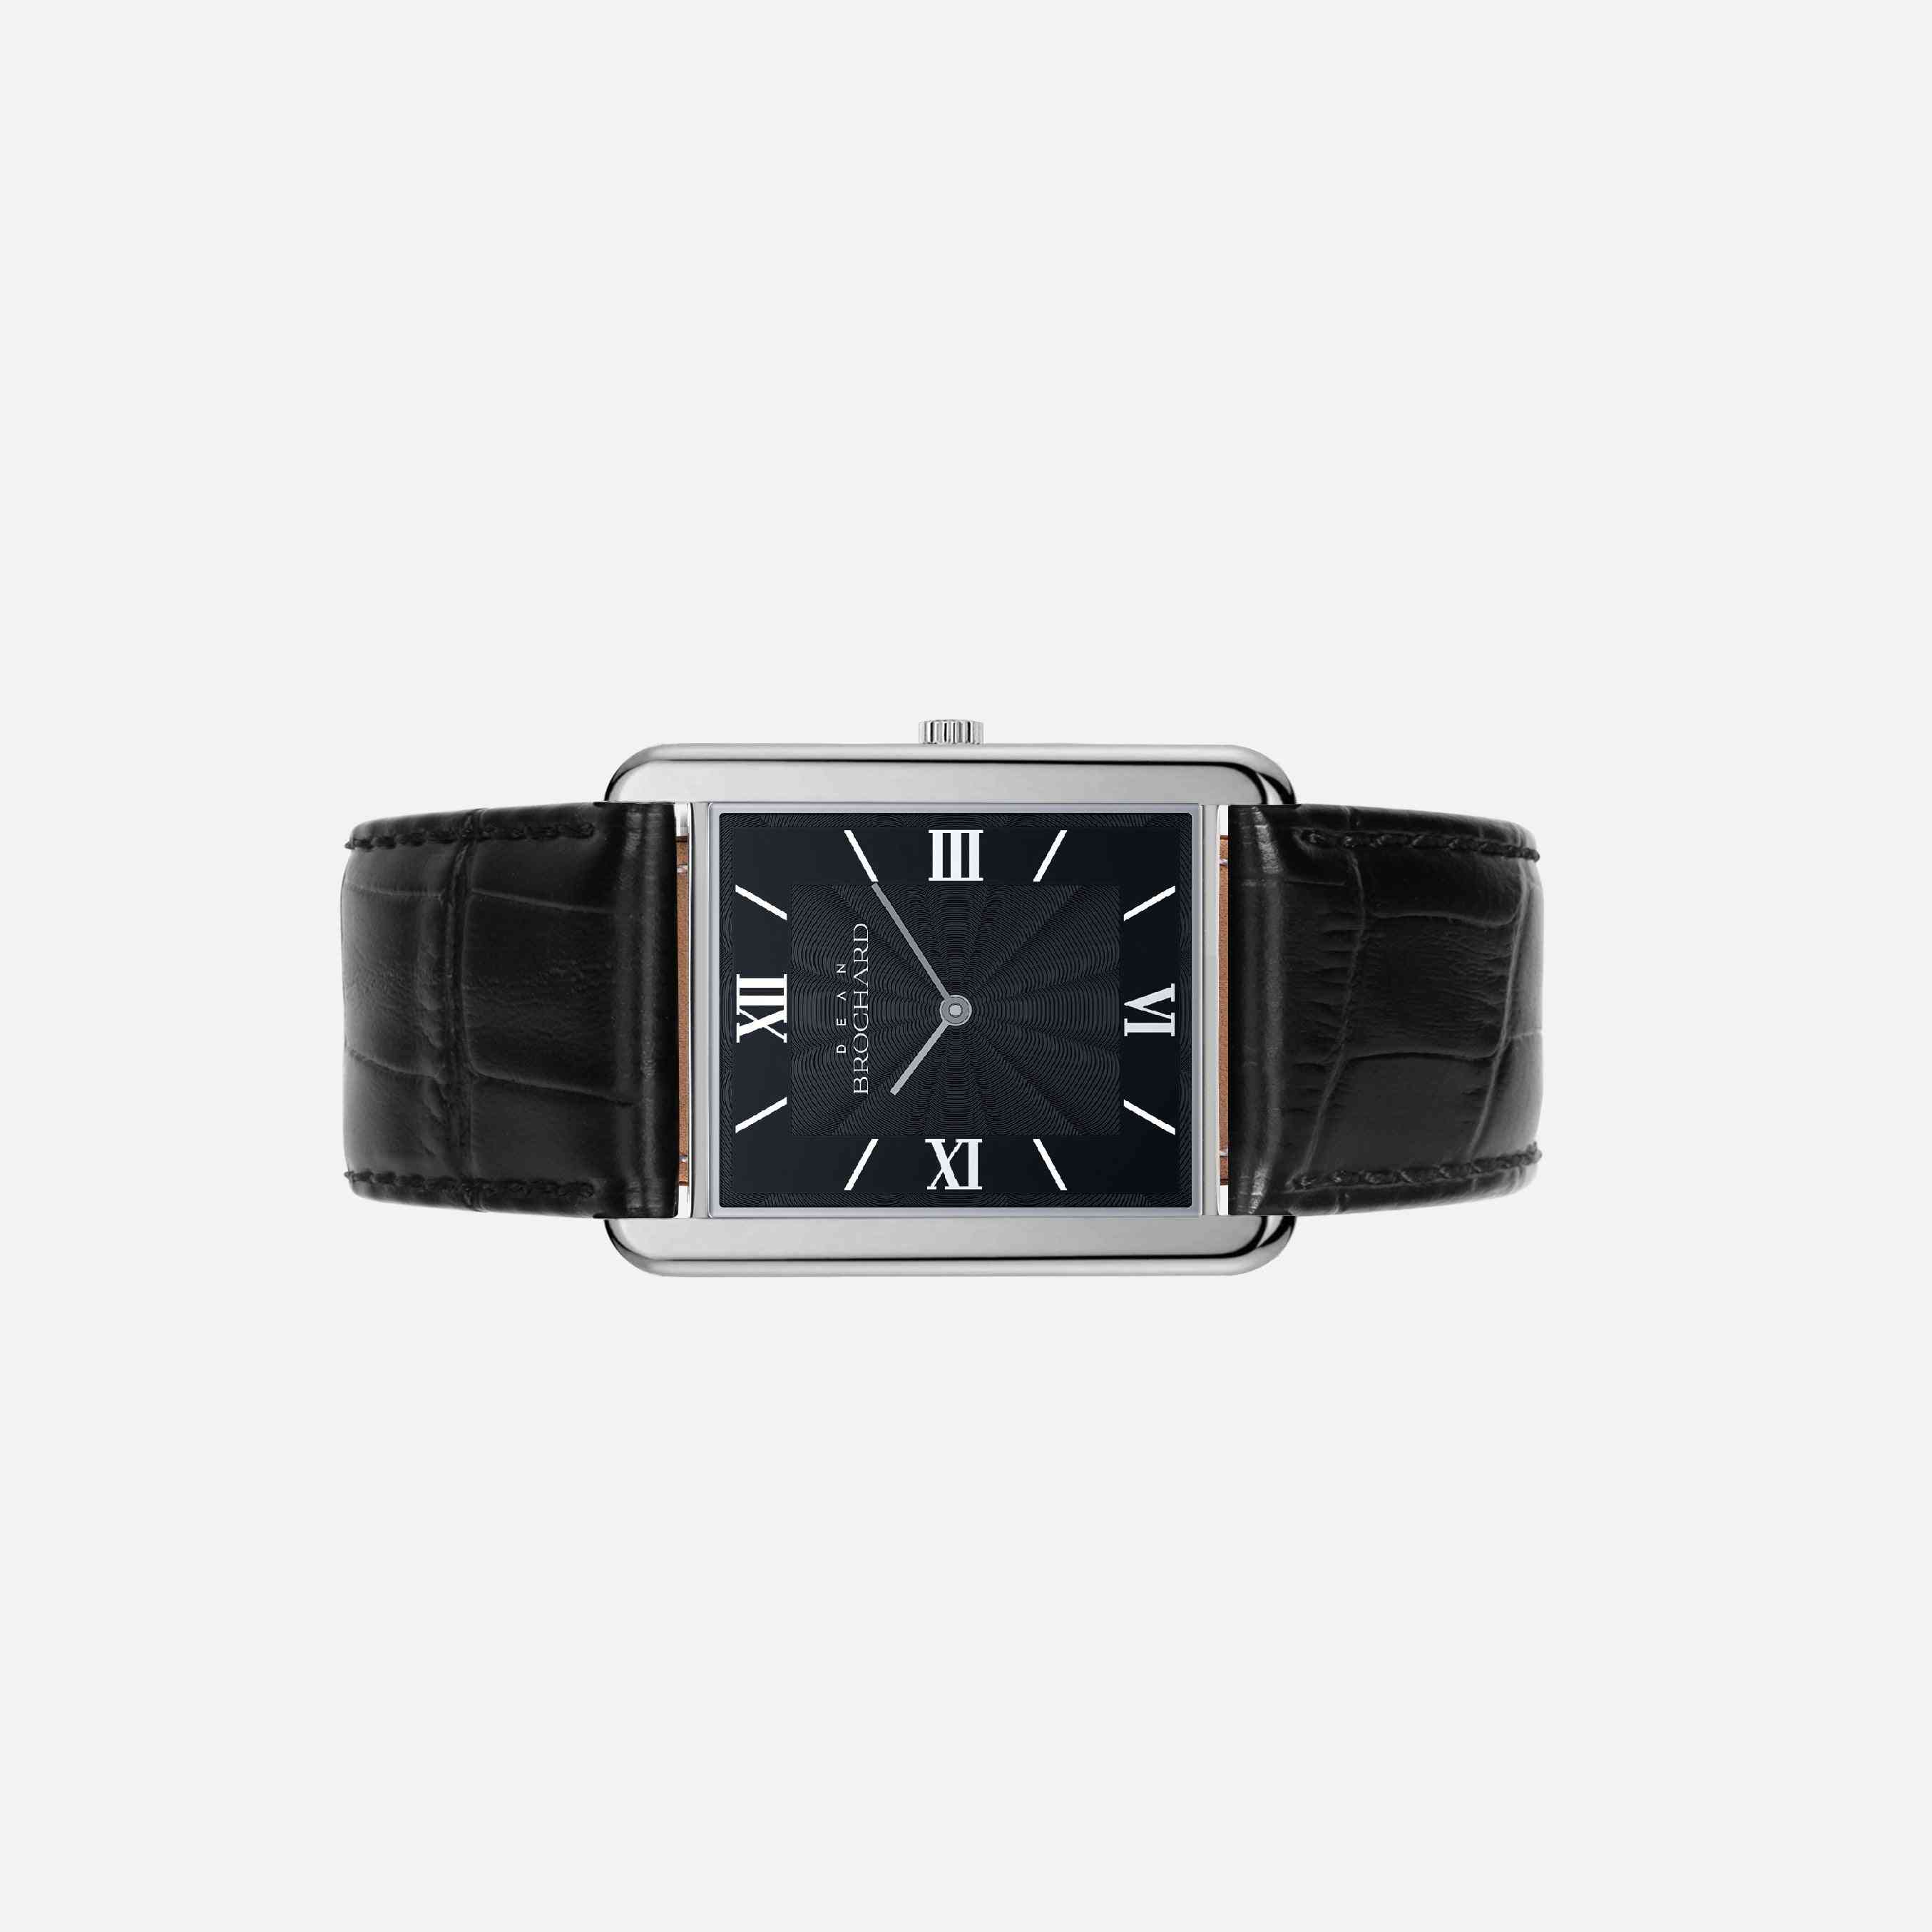 Leather Strap Minimalist Square Shape Dial Wrist Watch